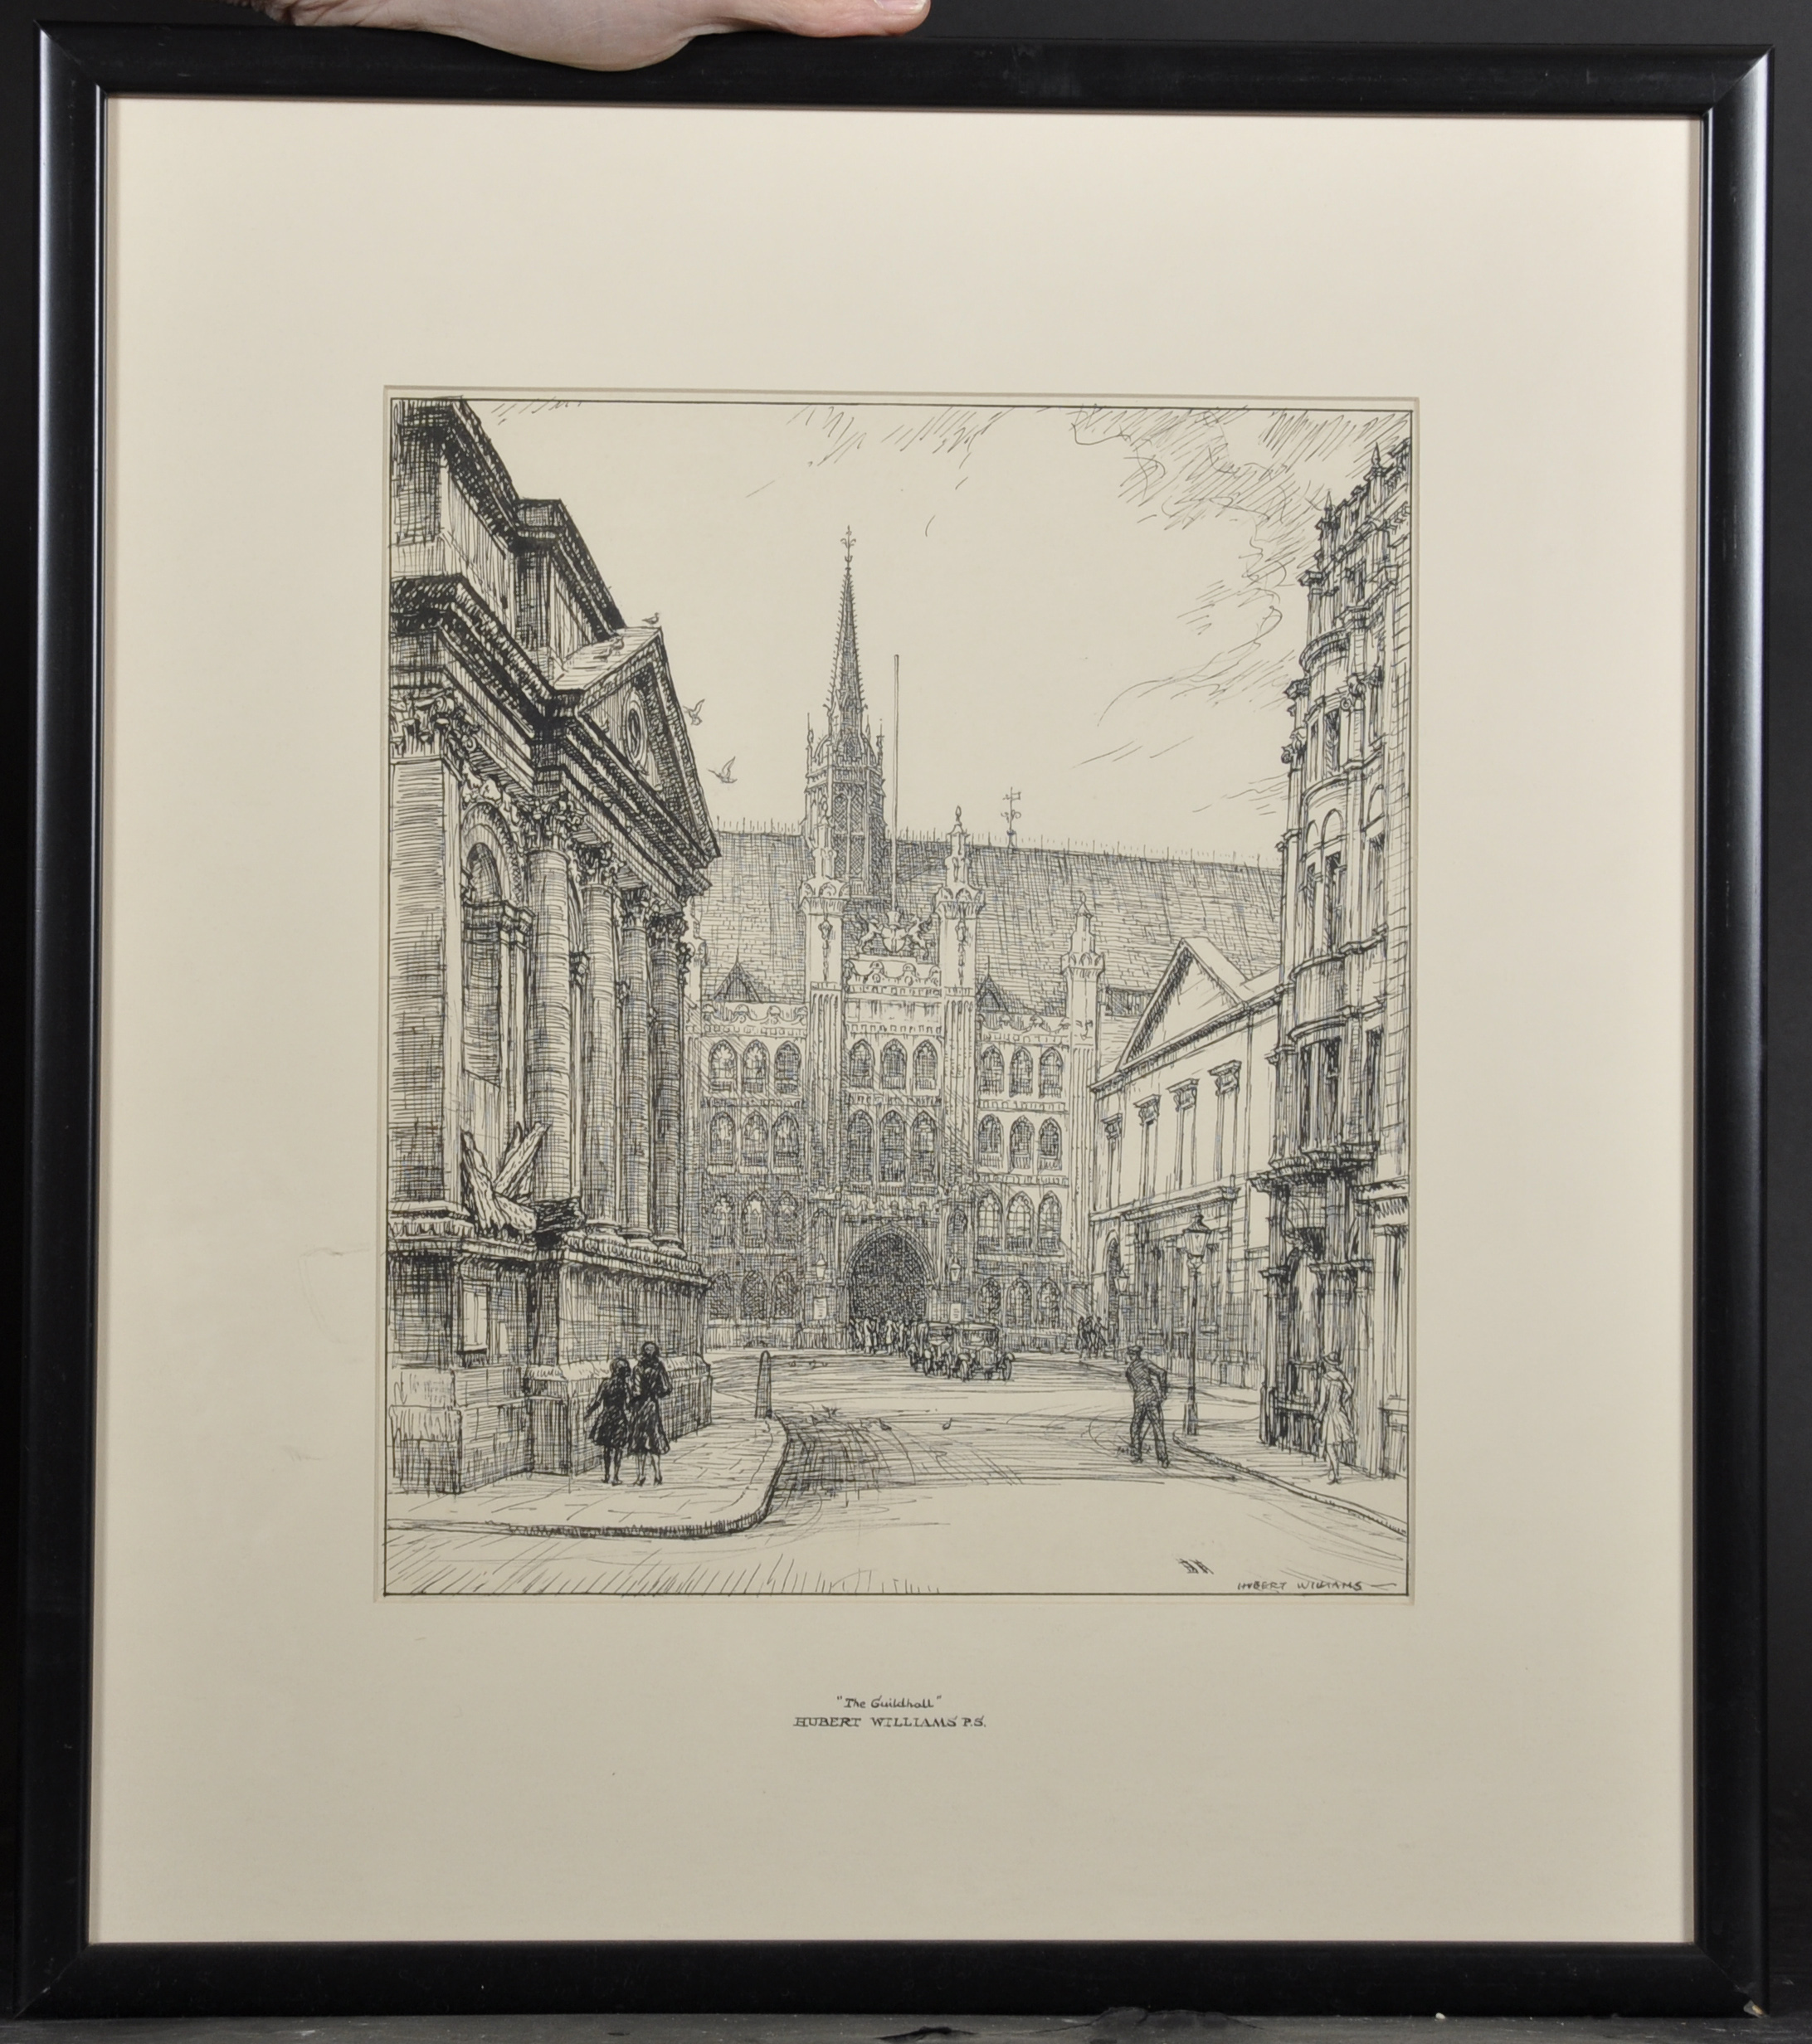 Herbert Williams (20th - 21st Century) British. "Lambeth Palace and Church, From Lambeth Bridge", - Image 10 of 11